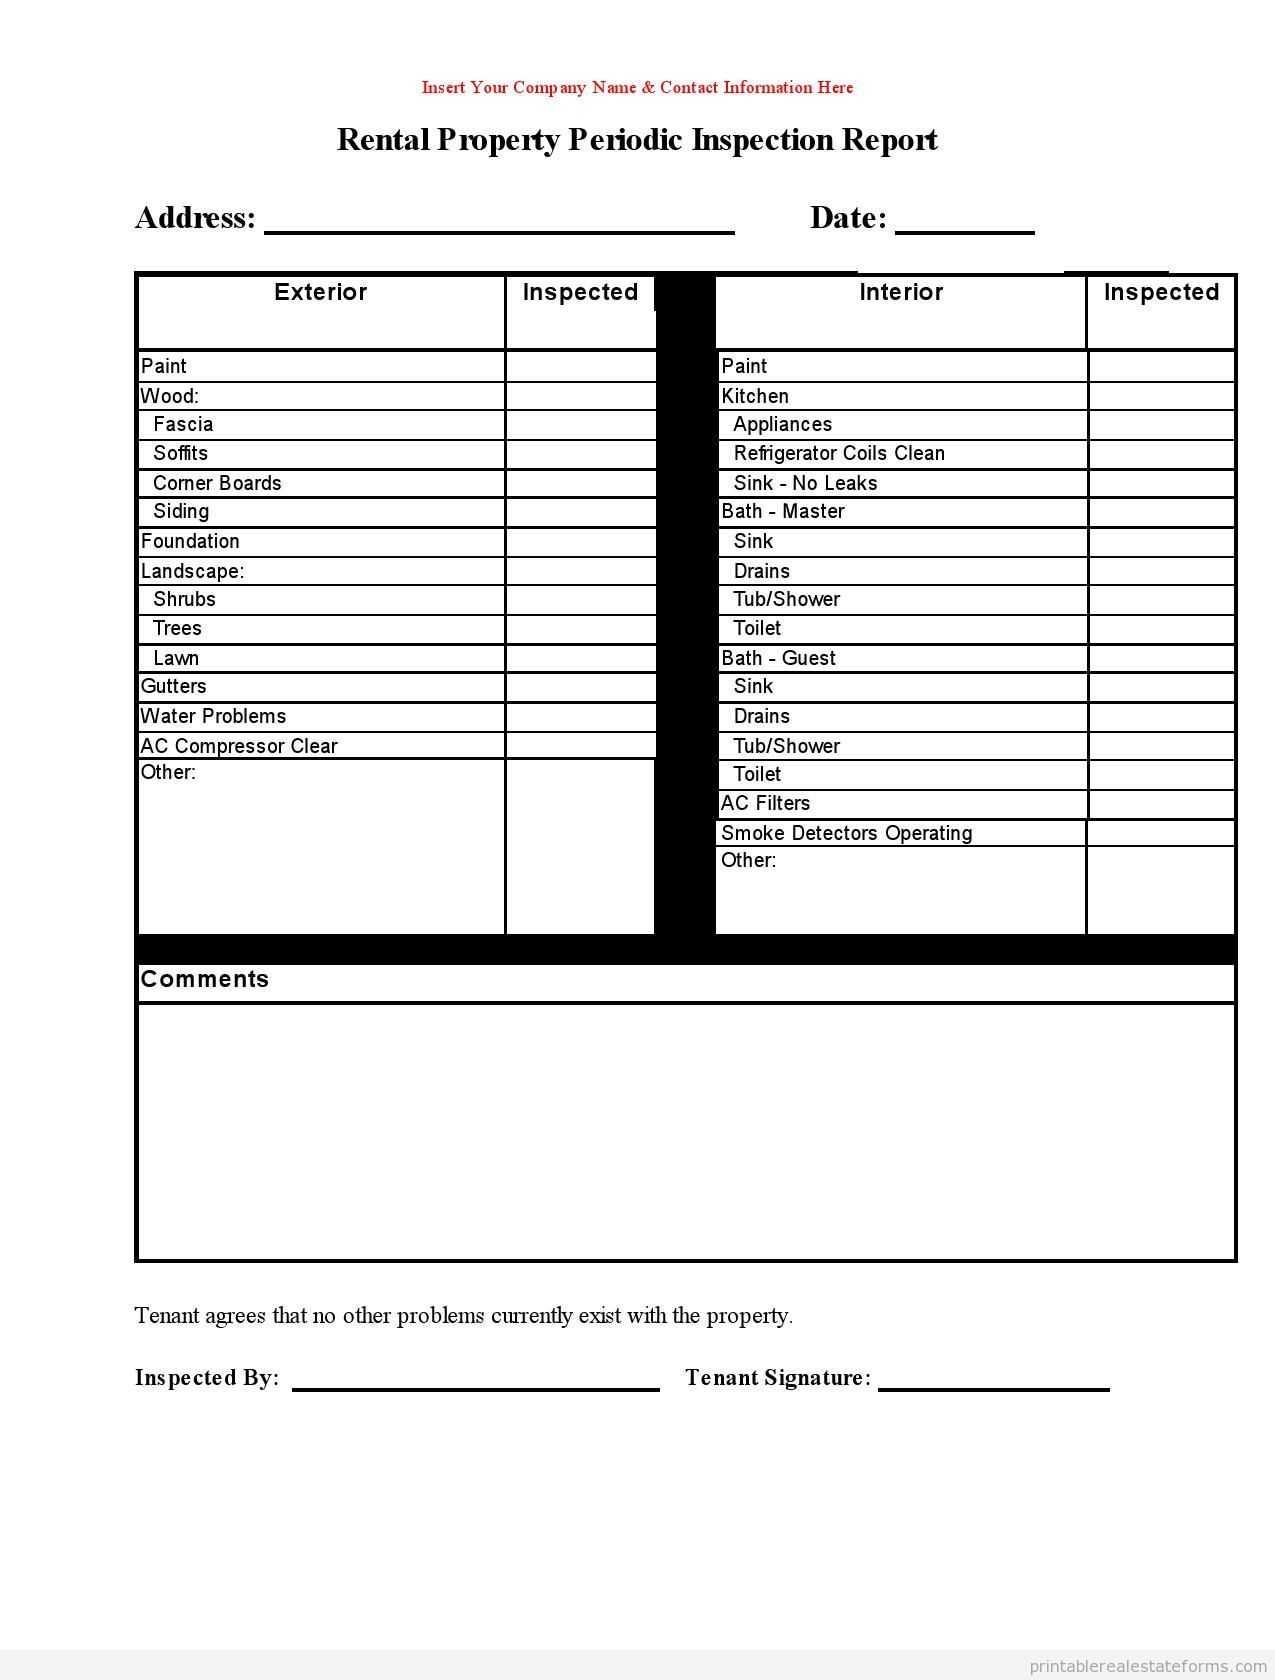 Free Printable Rental Property Periodic Inspection Report For Commercial Property Inspection Report Template